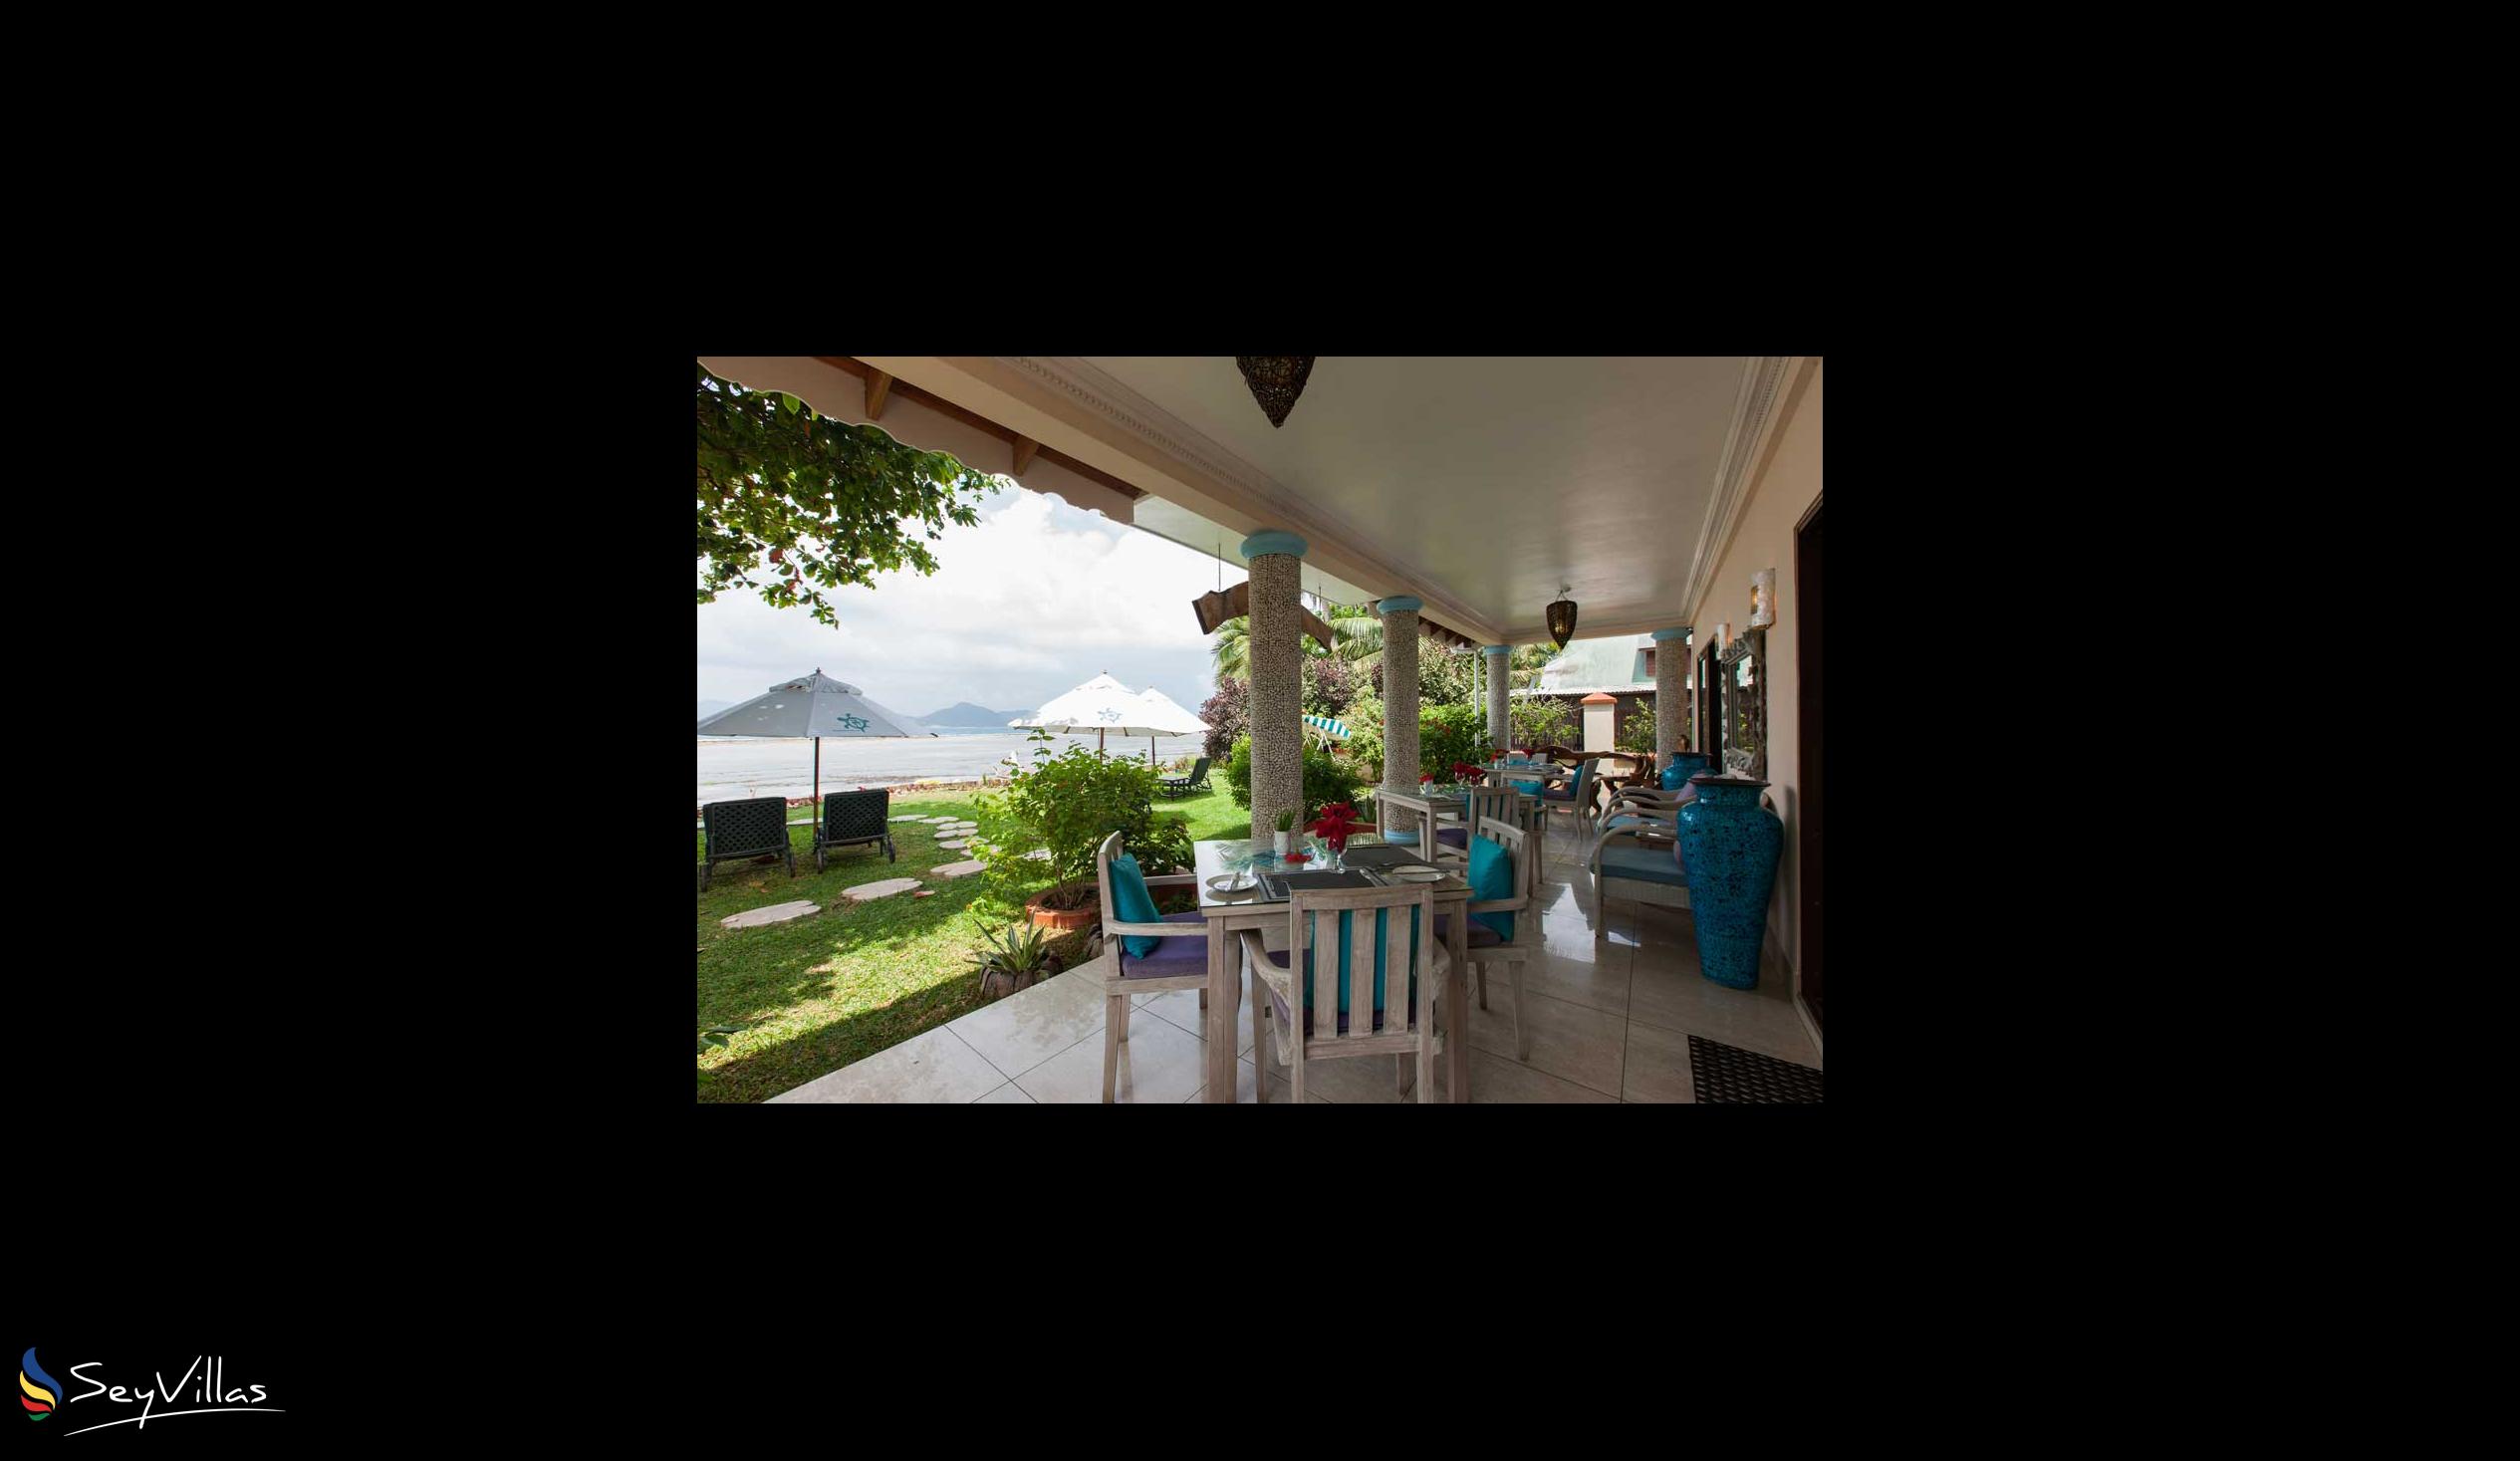 Foto 6: Le Relax Beach House - Interno - La Digue (Seychelles)